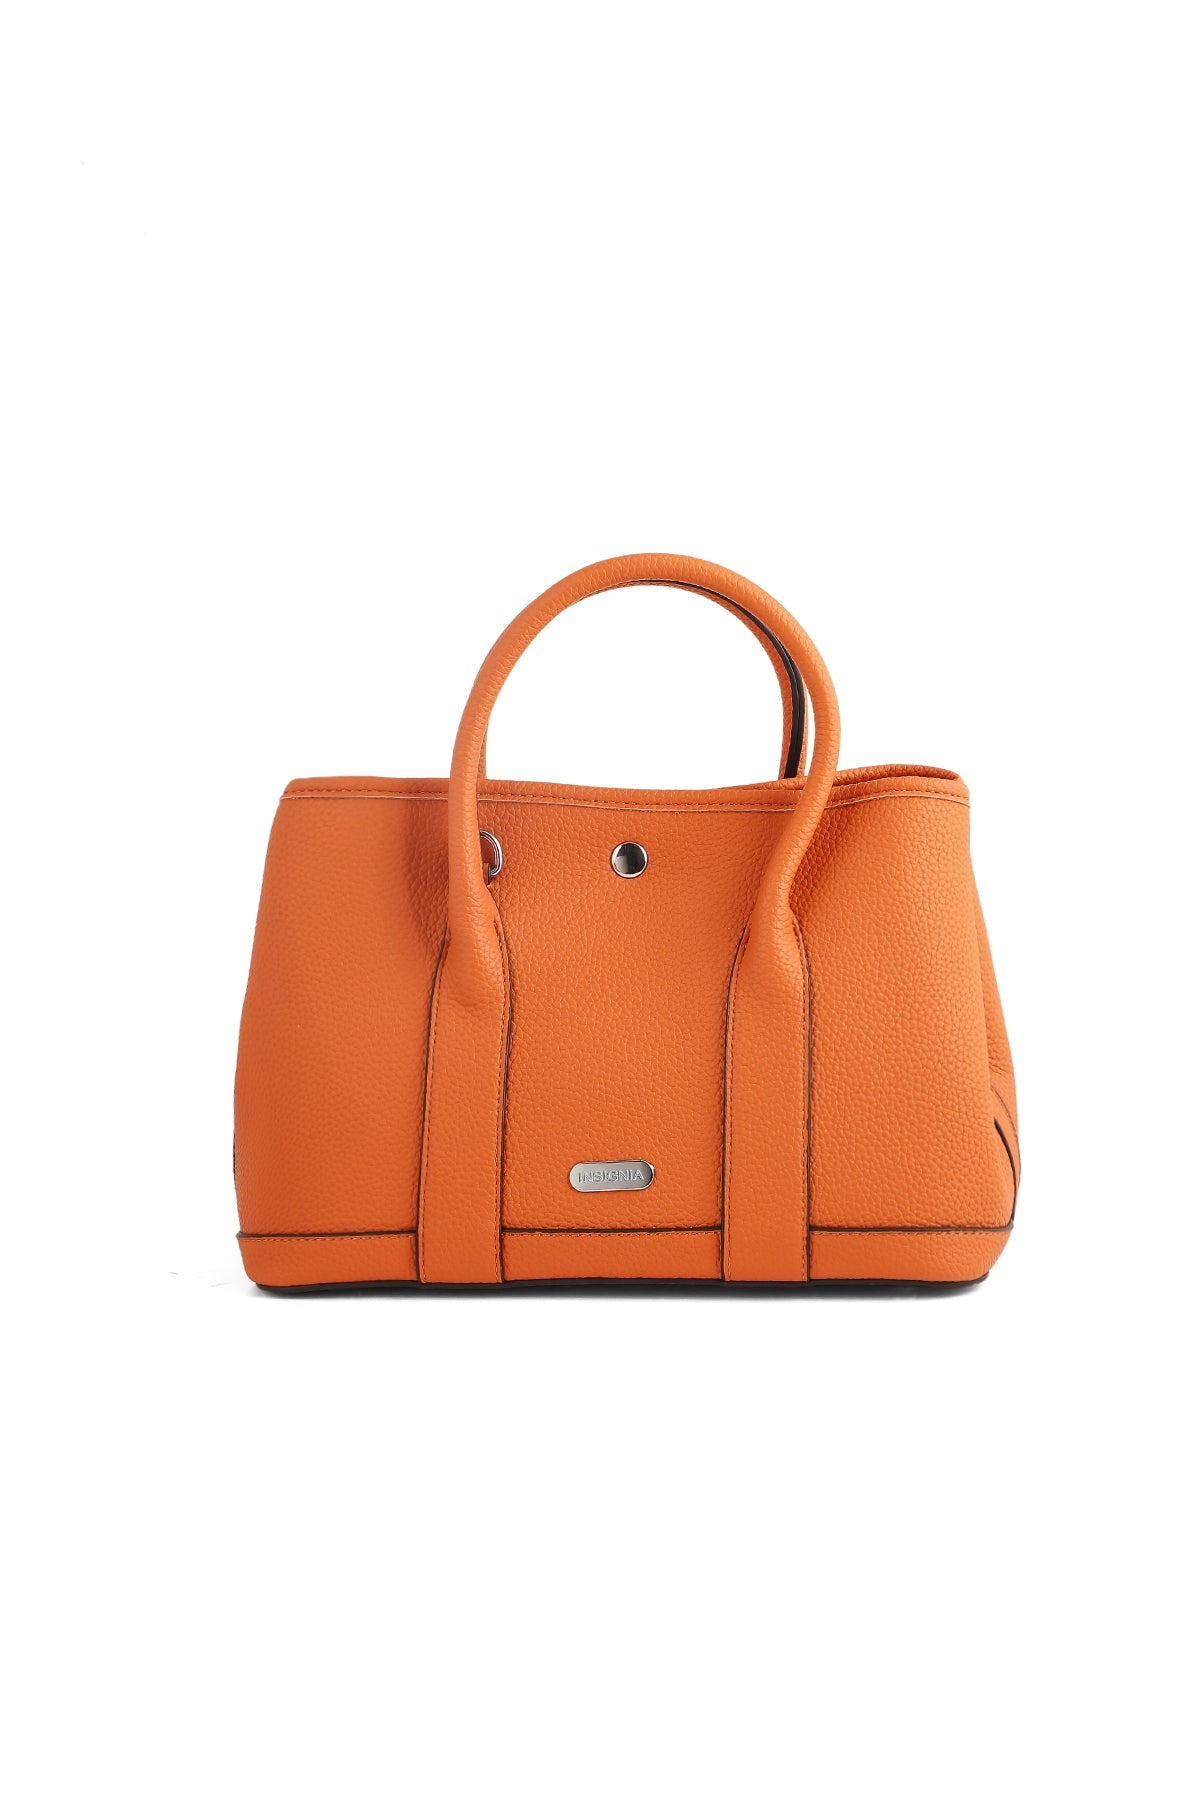 Casual Tote Hand Bags B14983-Orange